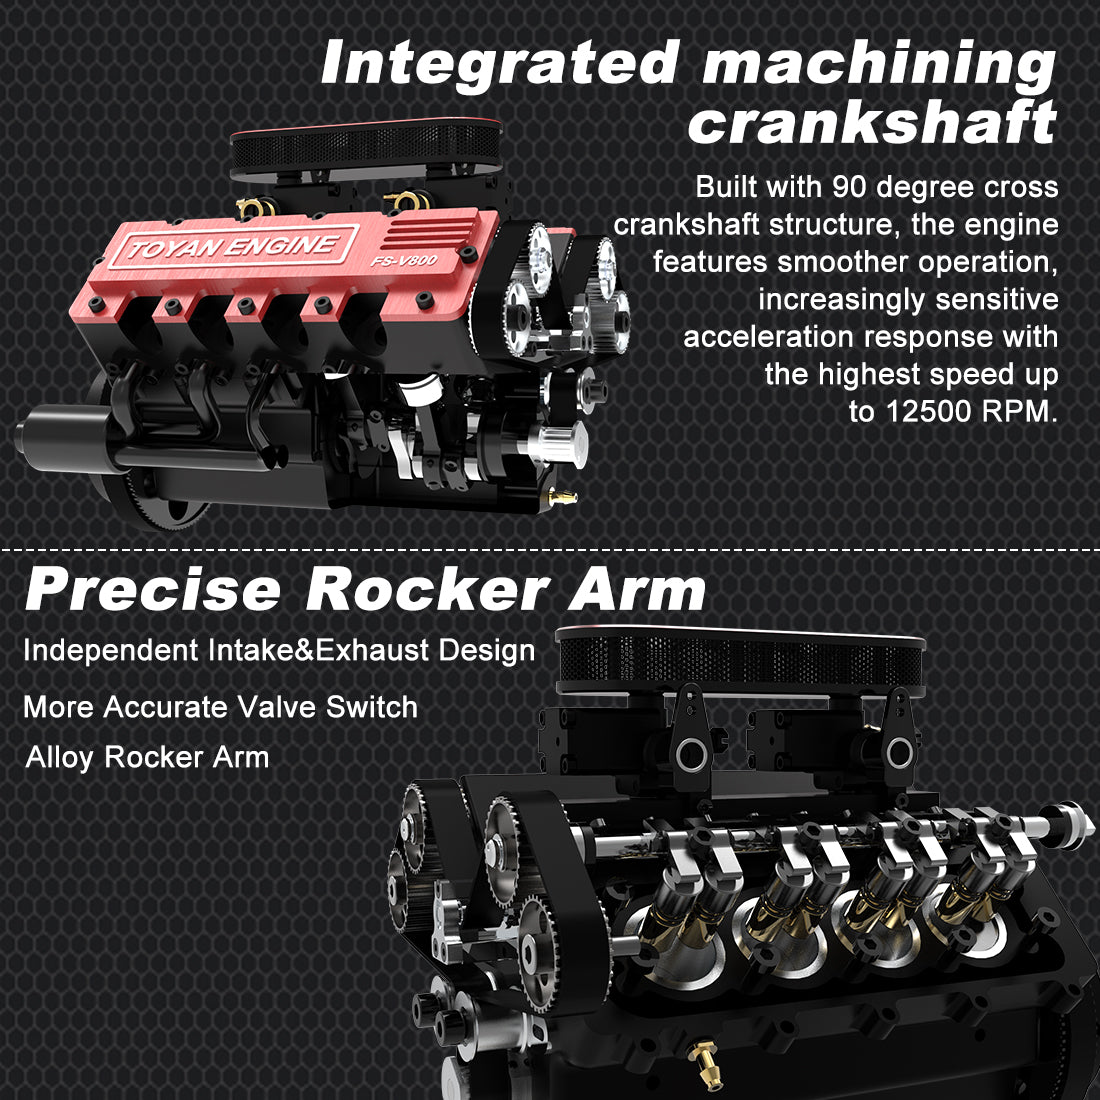 TOYAN V8 Engine FS-V800 28cc Nitro Engine - Build Your Own V8 Engine - V8 Engine Model Kit That Works